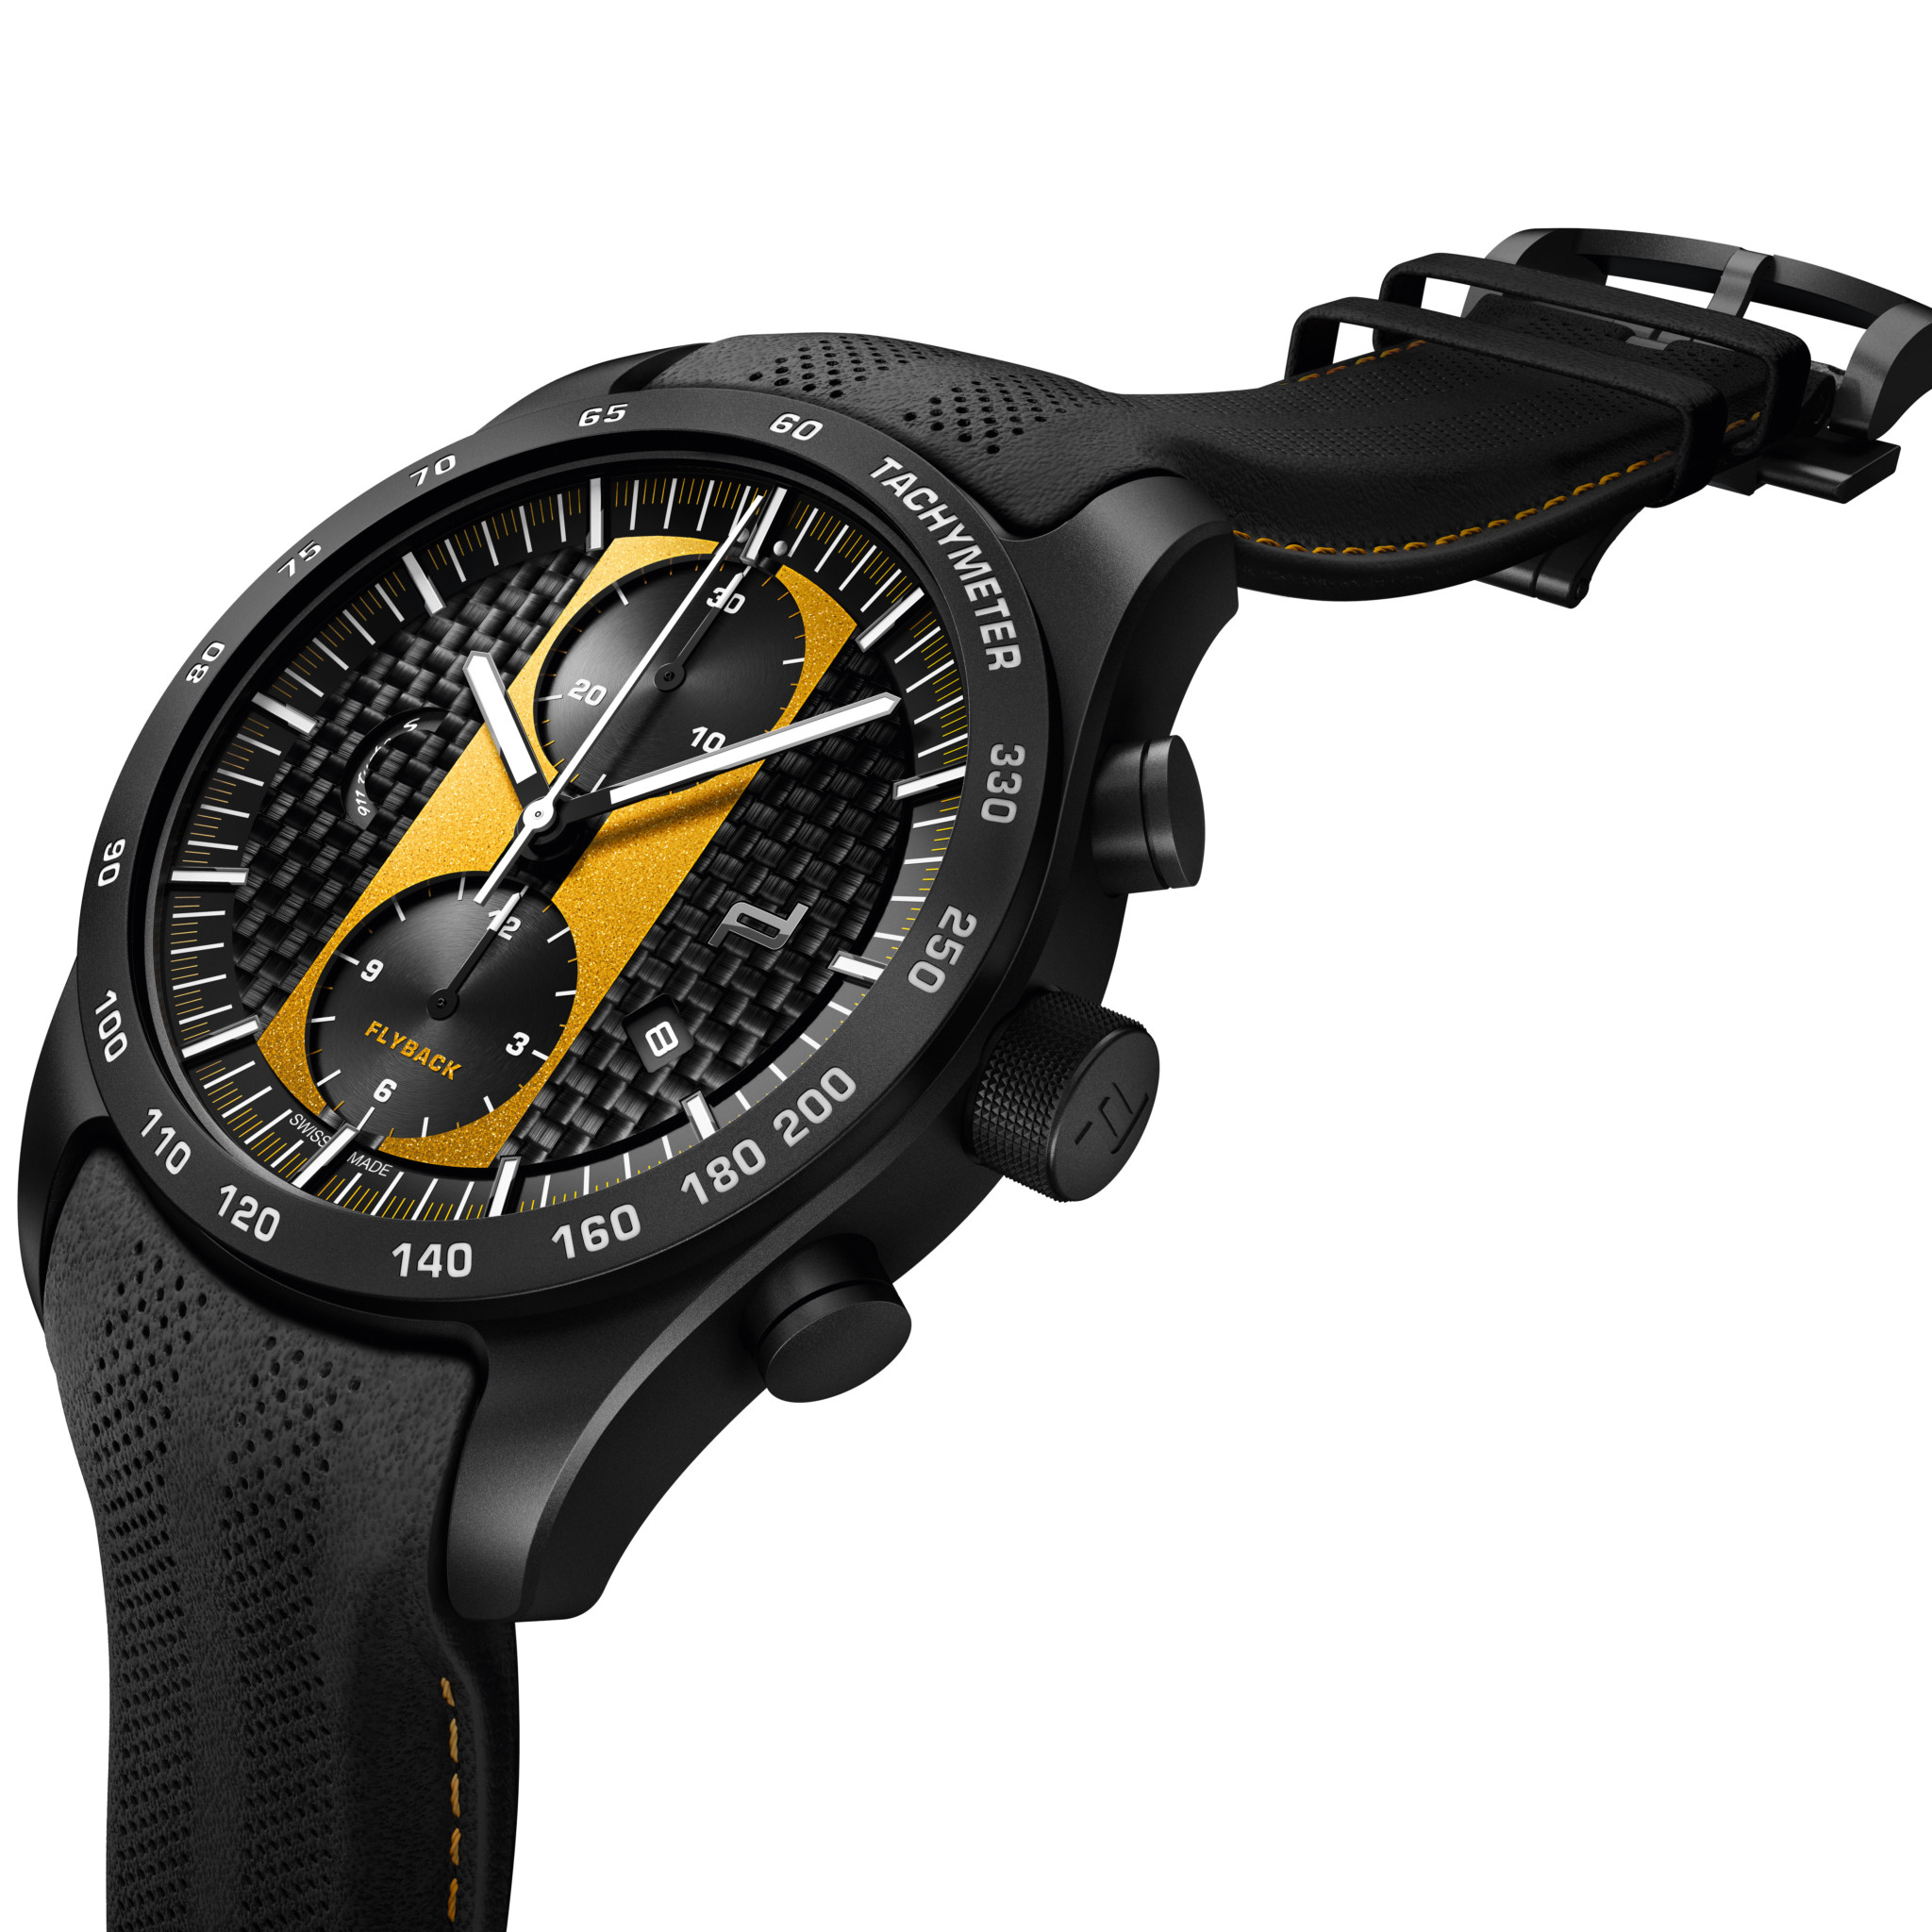 Porsche x Garmin Epix 2 special edition smartwatch launches with exclusive  watch faces - NotebookCheck.net News